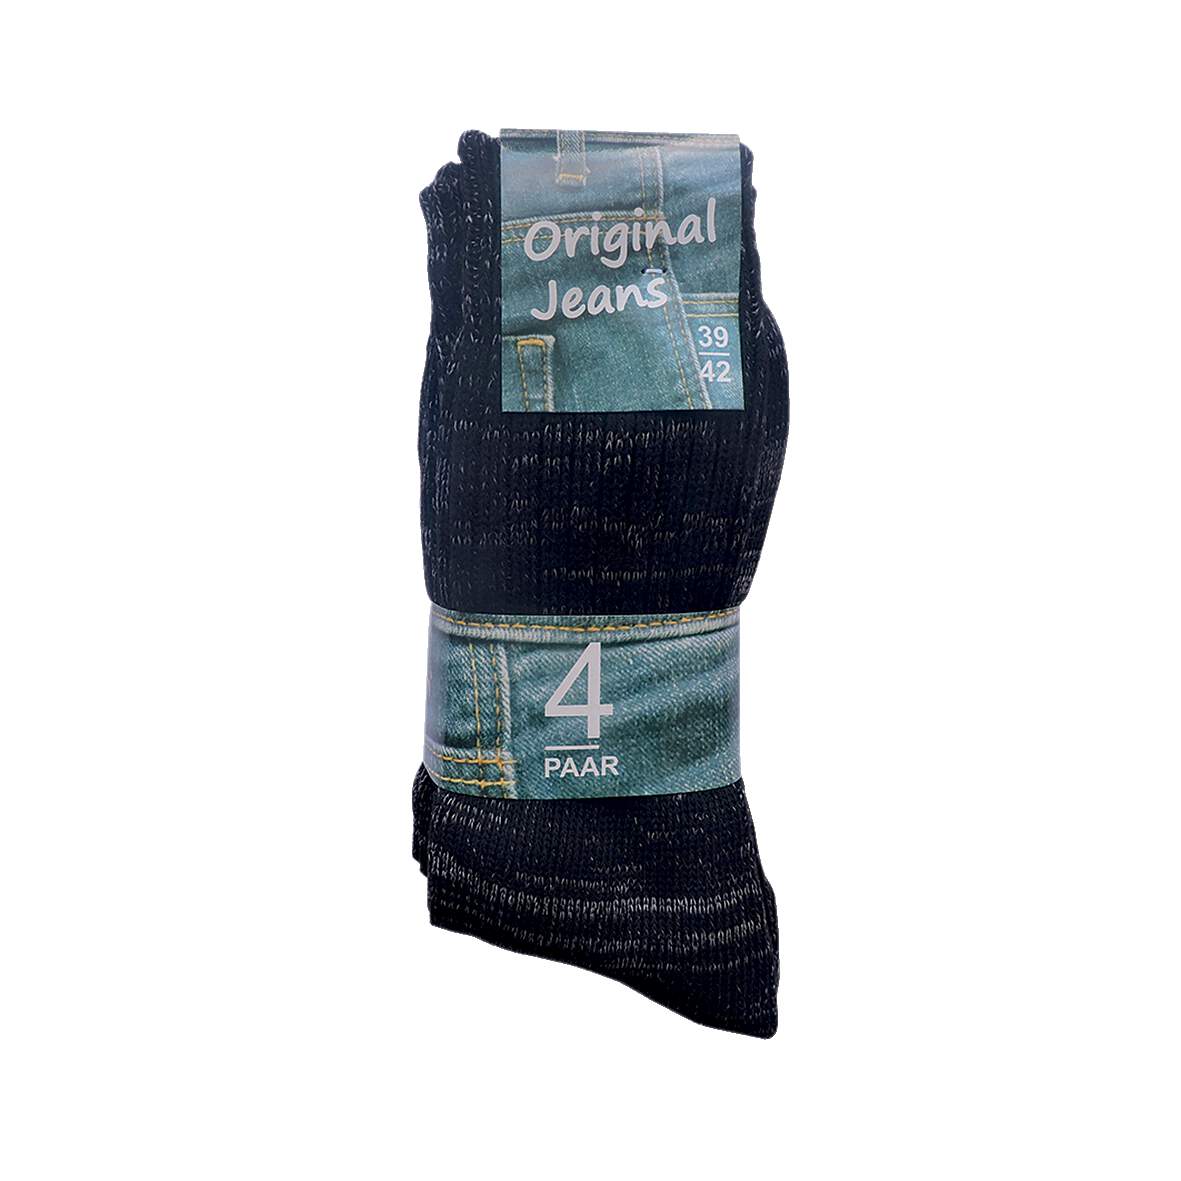 1177697 - Socken Original Jeans 5er